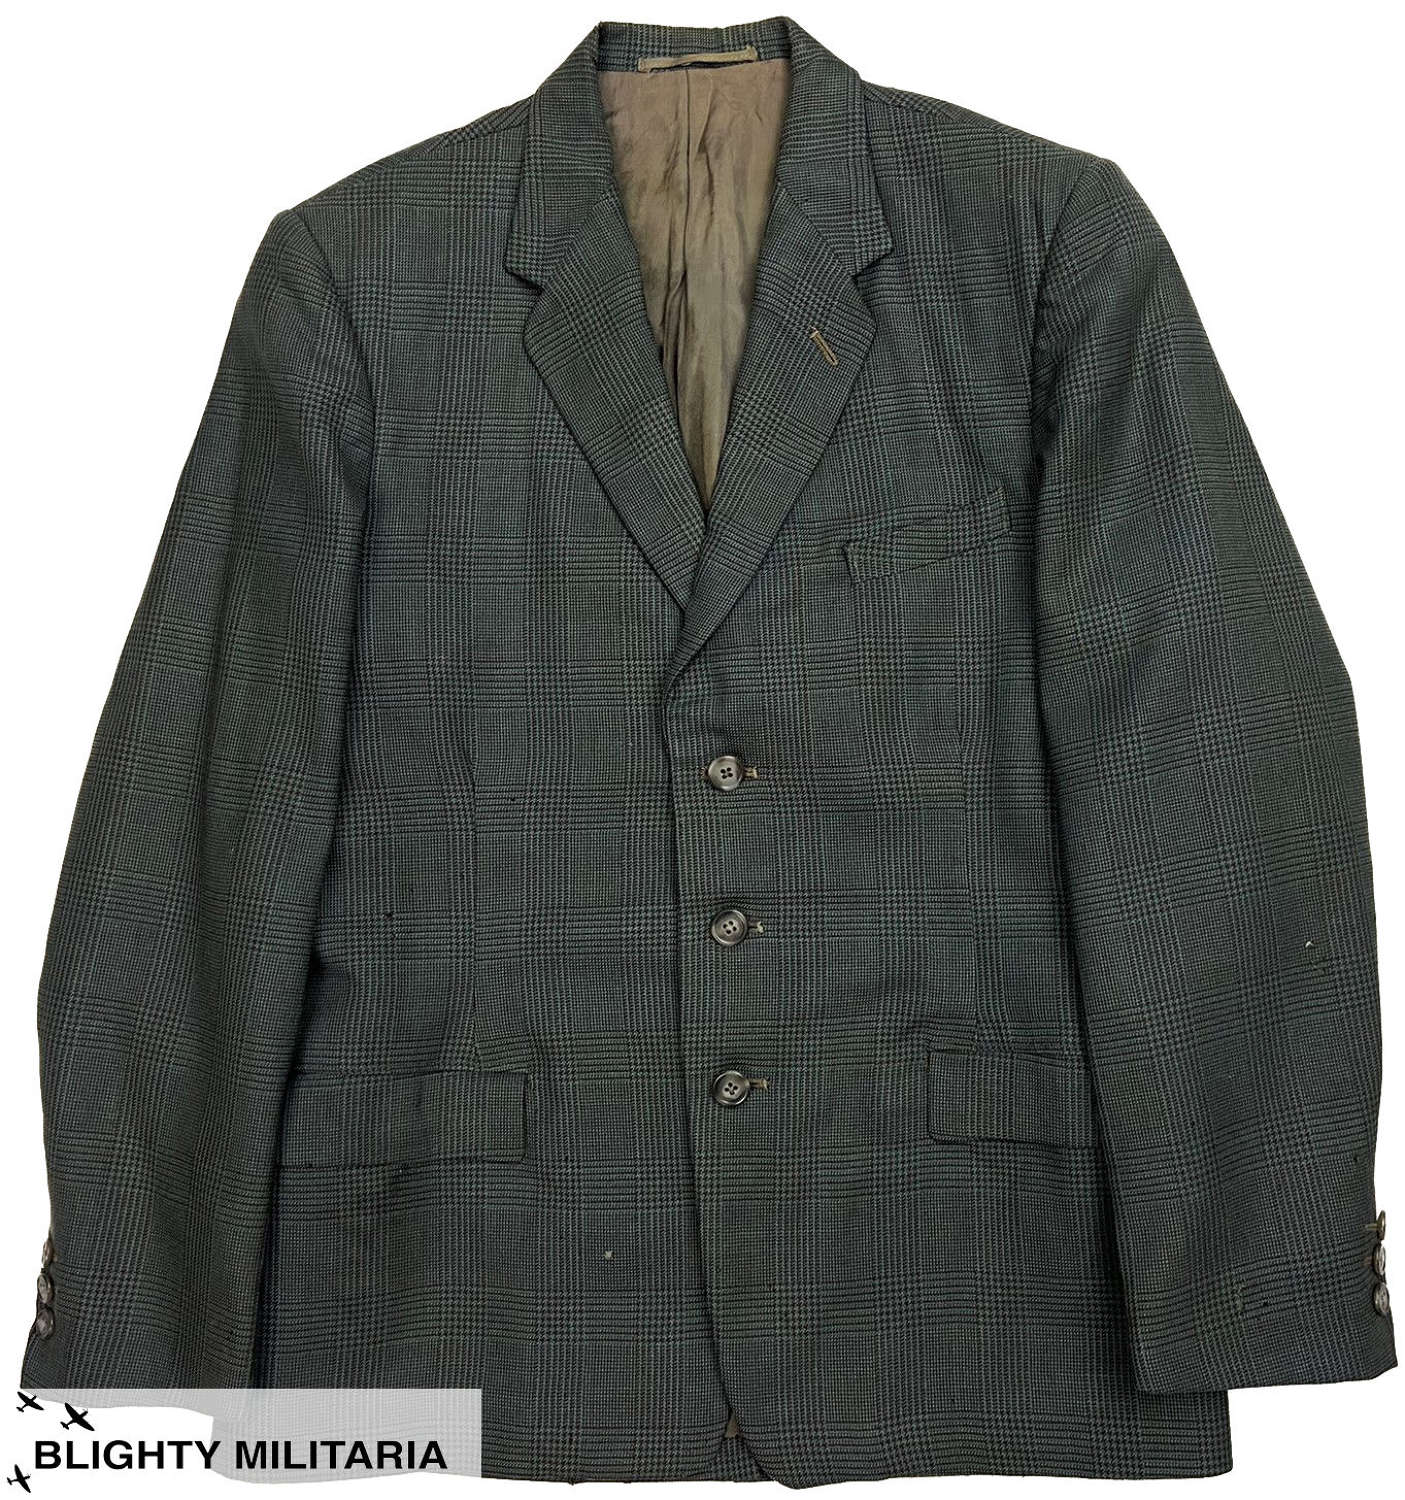 Original 1950s British Men's Windowpane Check Jacket by 'Viscount'